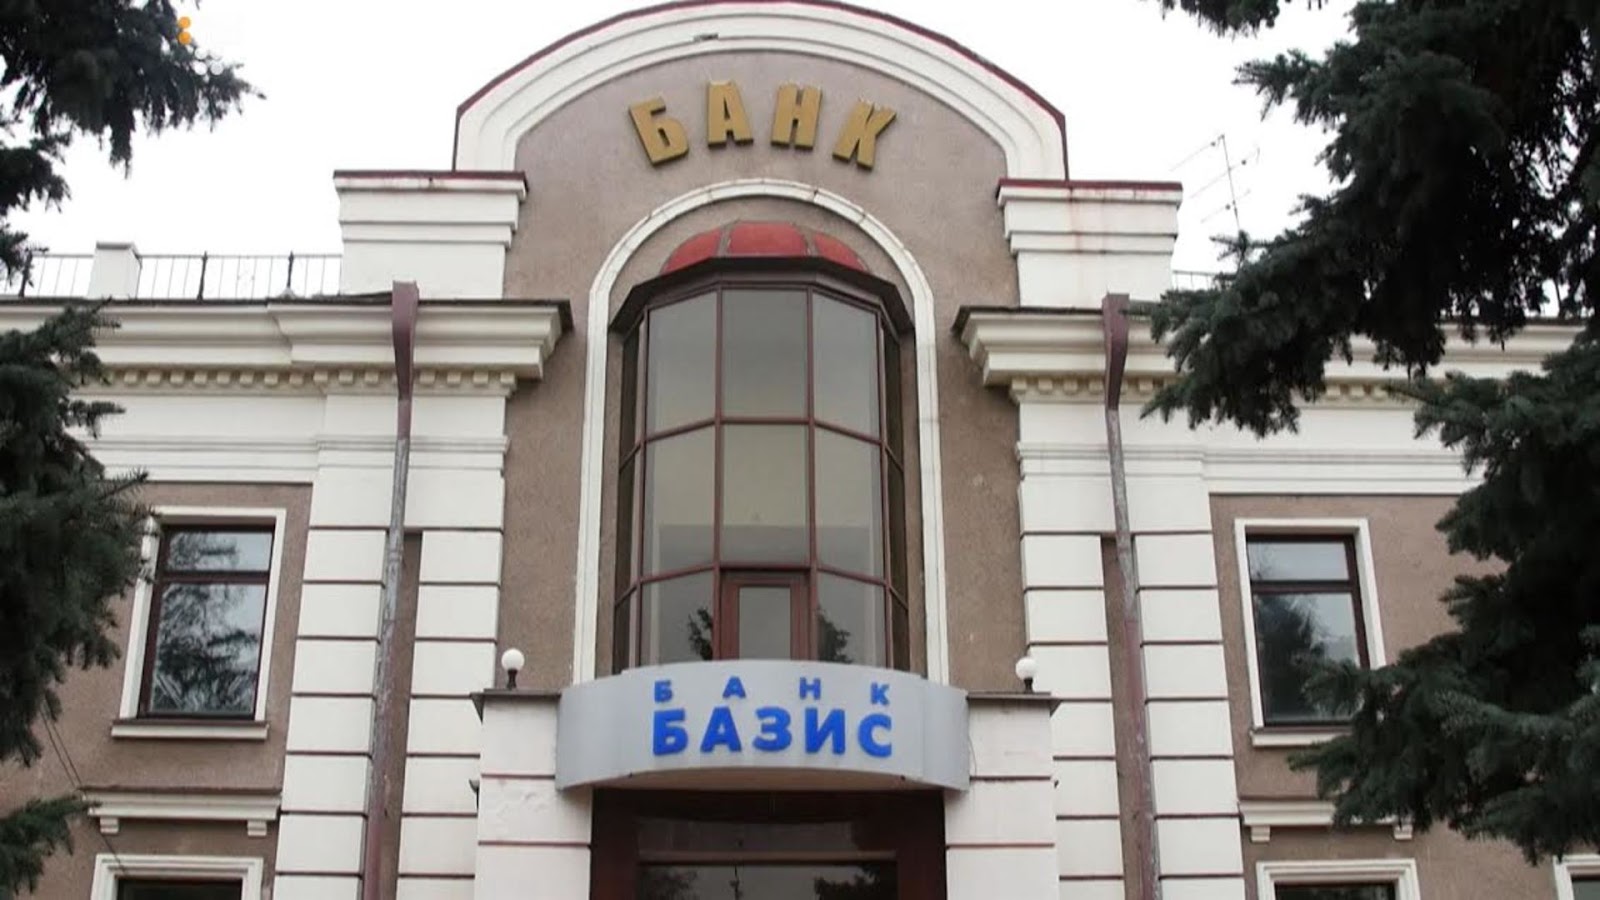 Принадлежащий Авакову банк "Базис". Фото © Hromadske.ua